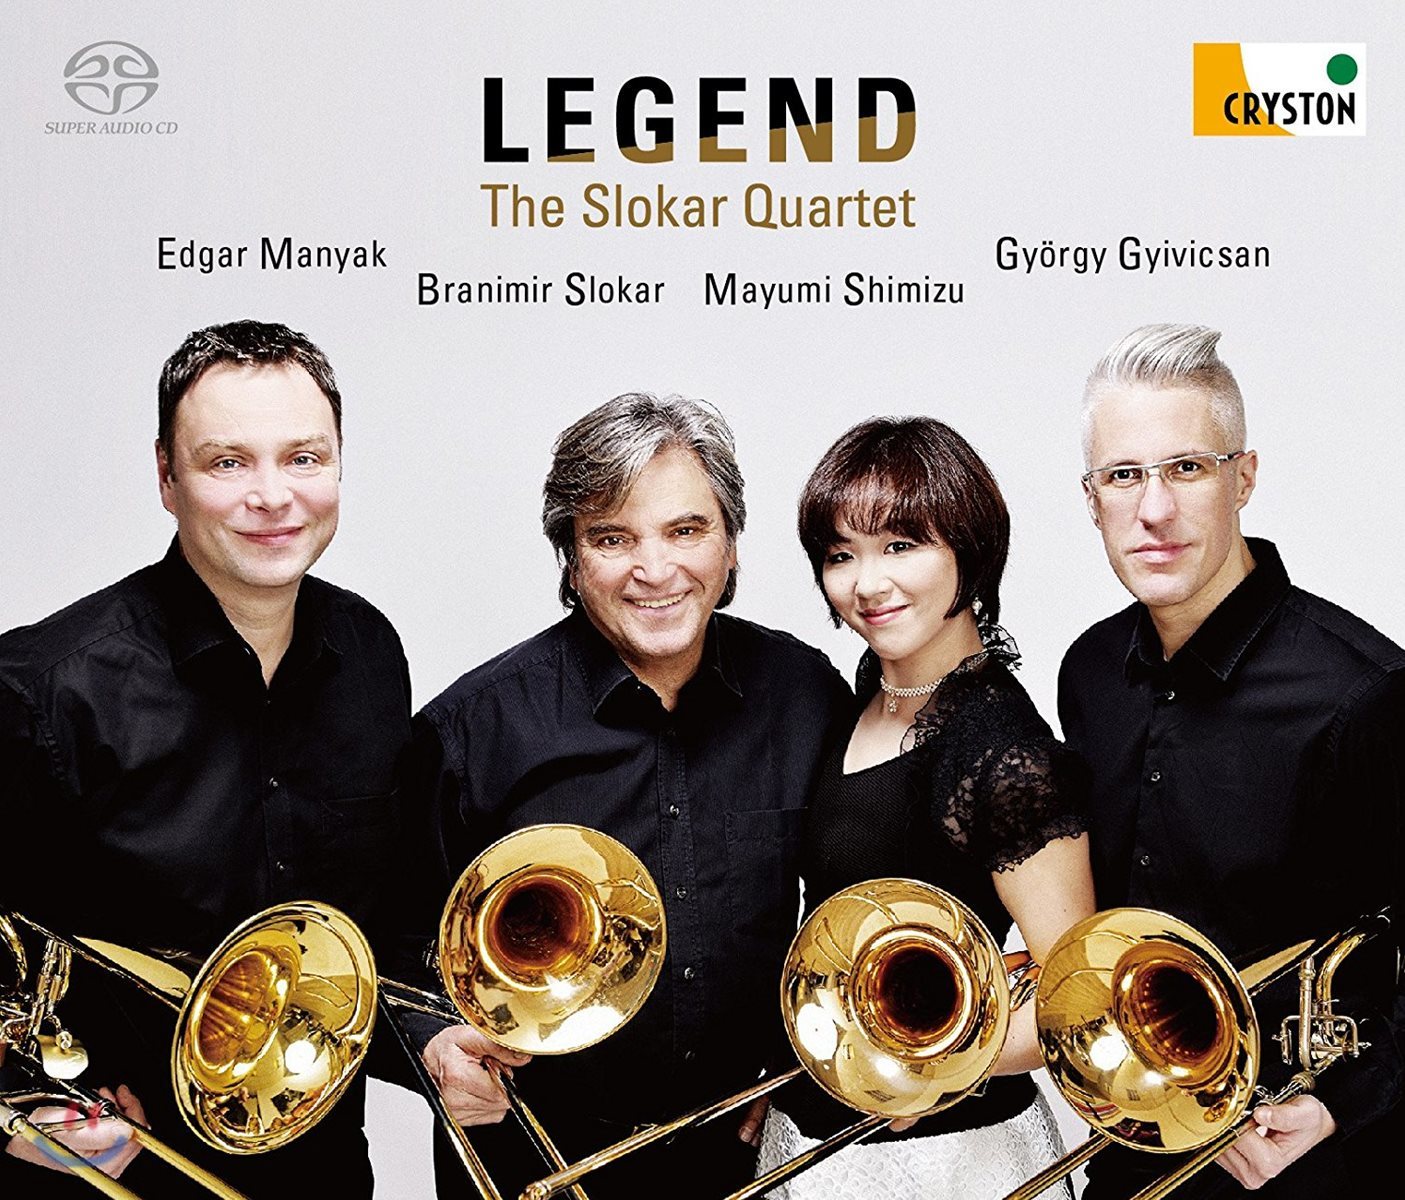 The Slokar Quartet 레전드 - 모차르트 / 바르톡: 트롬본 사중주 편곡 연주반 (Legend) 슬로카 사중주단